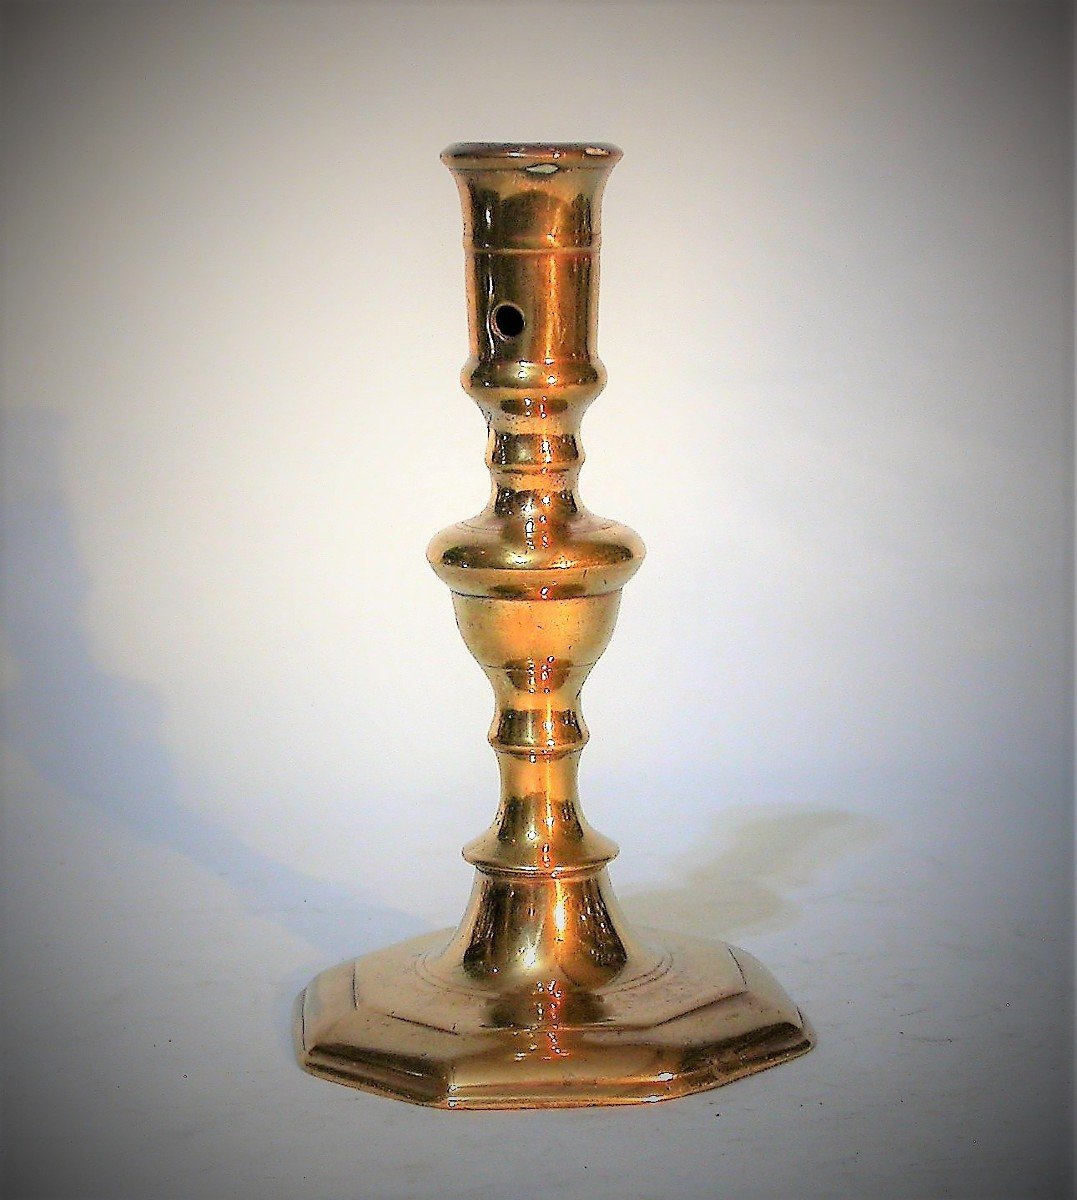 Brass Torch - France Or England, Circa 1700